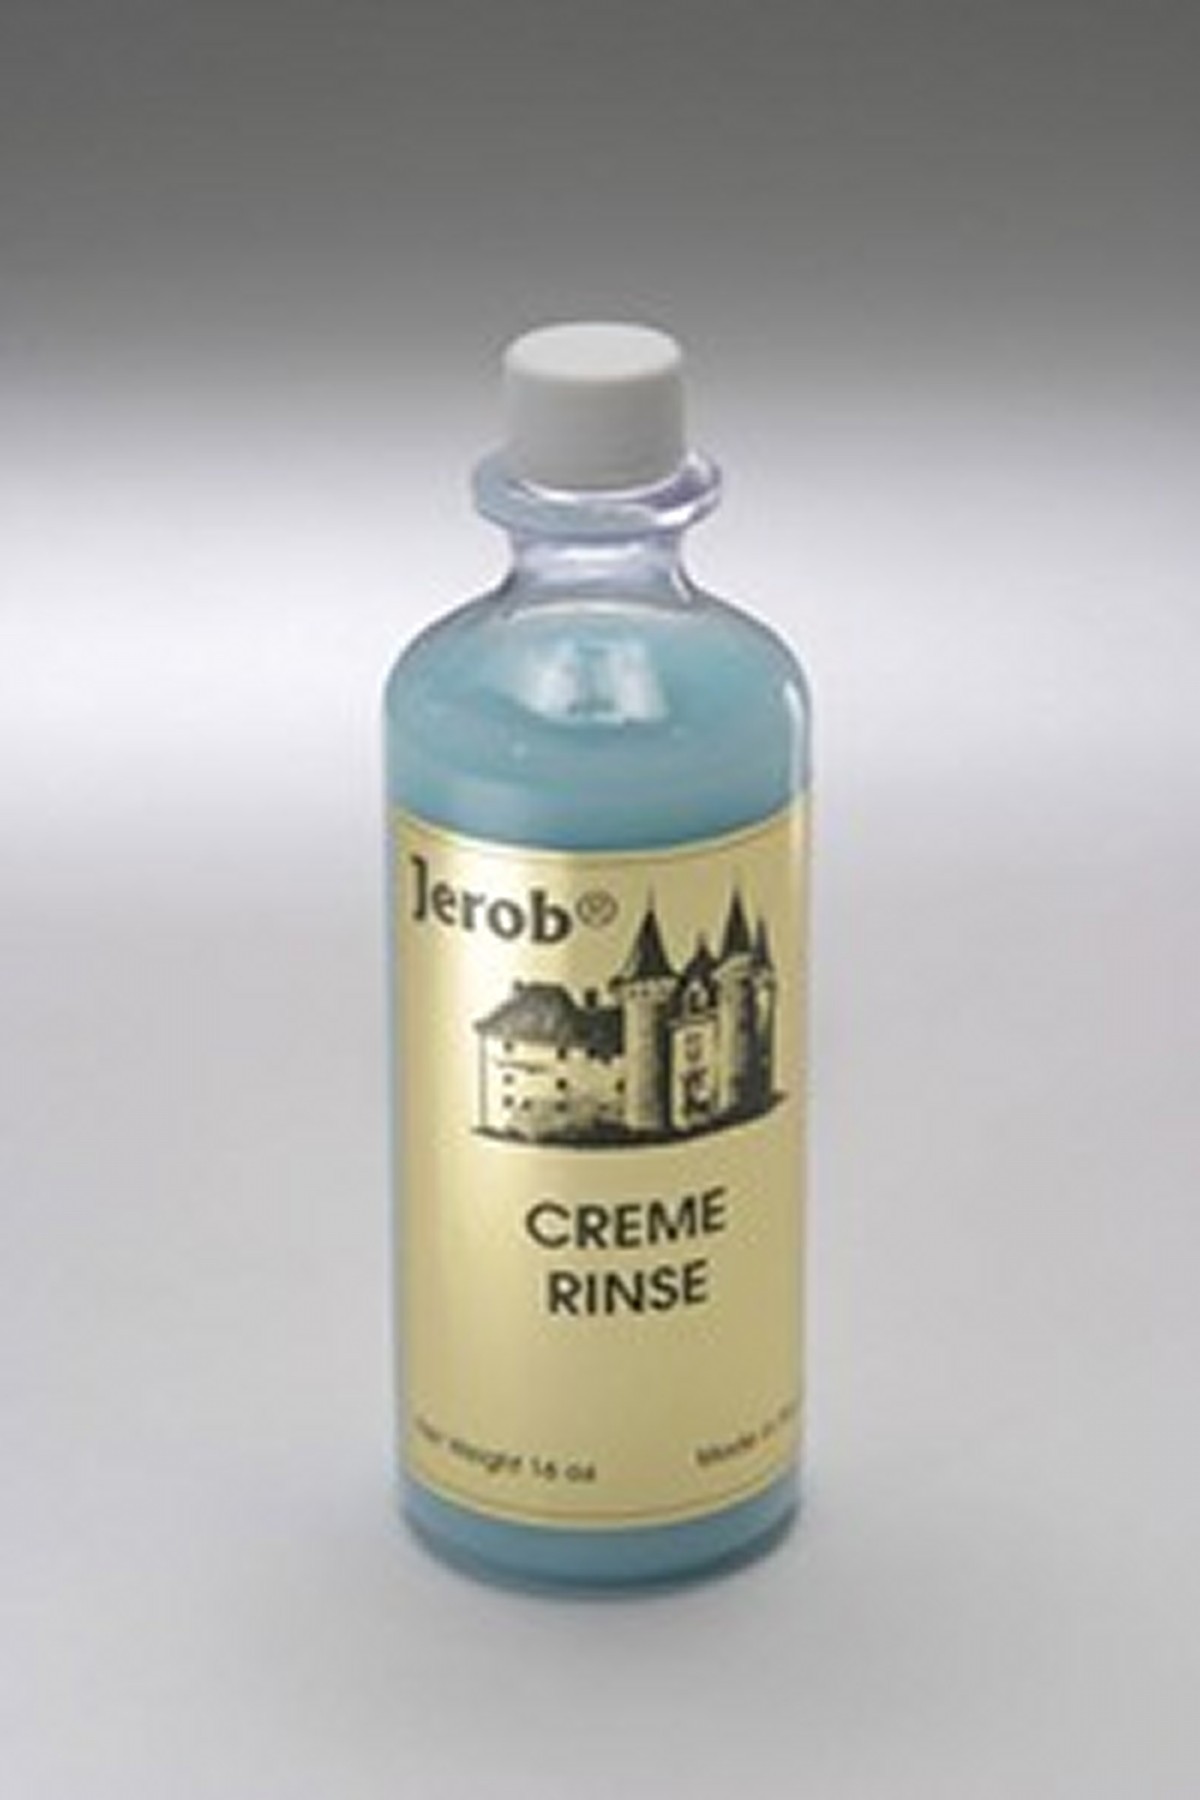 Jerob Shampoo Creme Rinse 473 ml